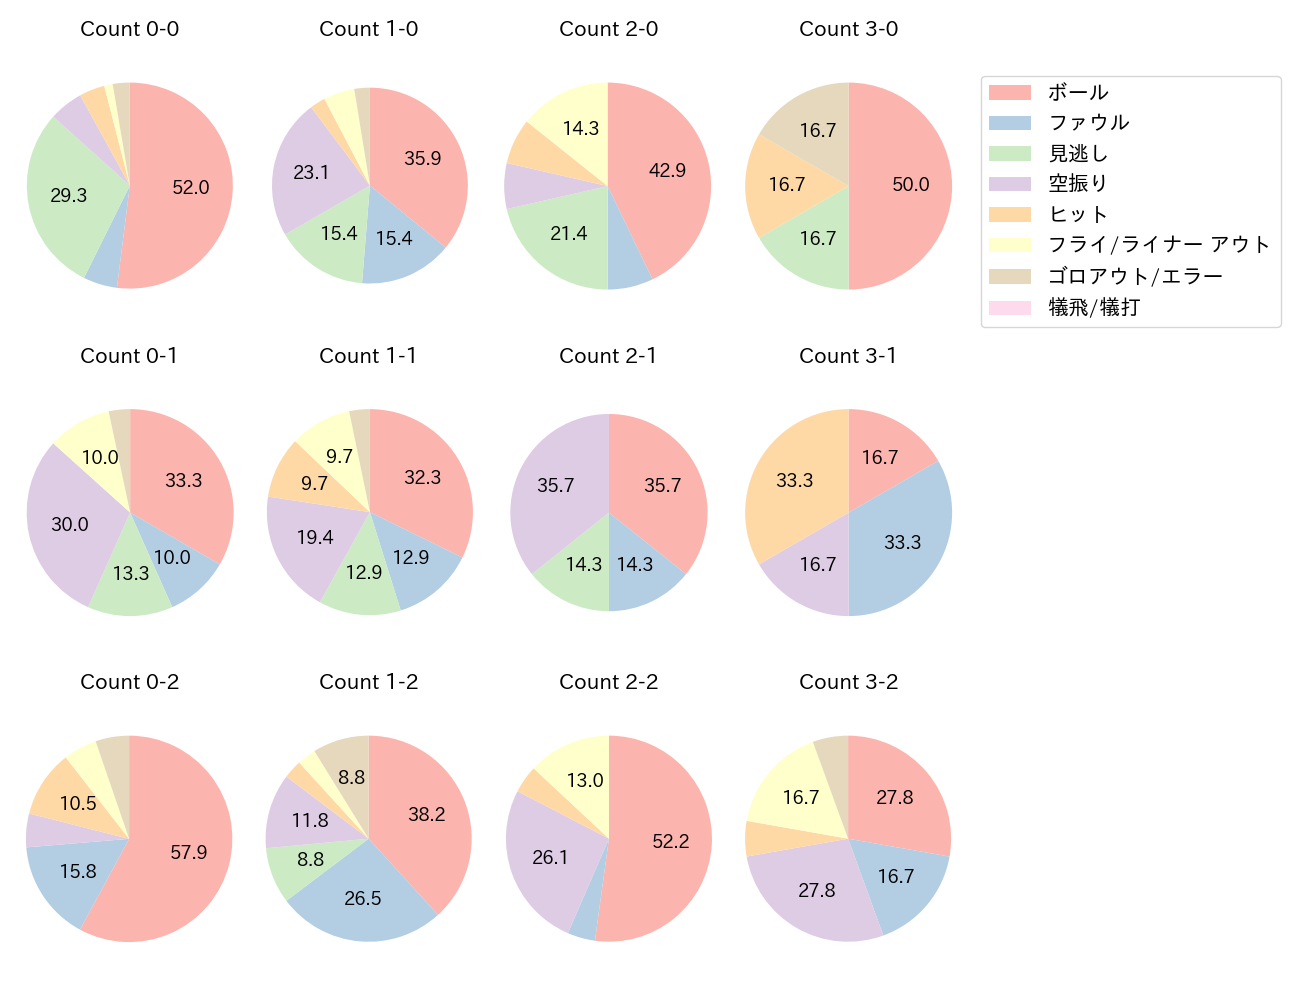 山川 穂高の球数分布(2021年5月)